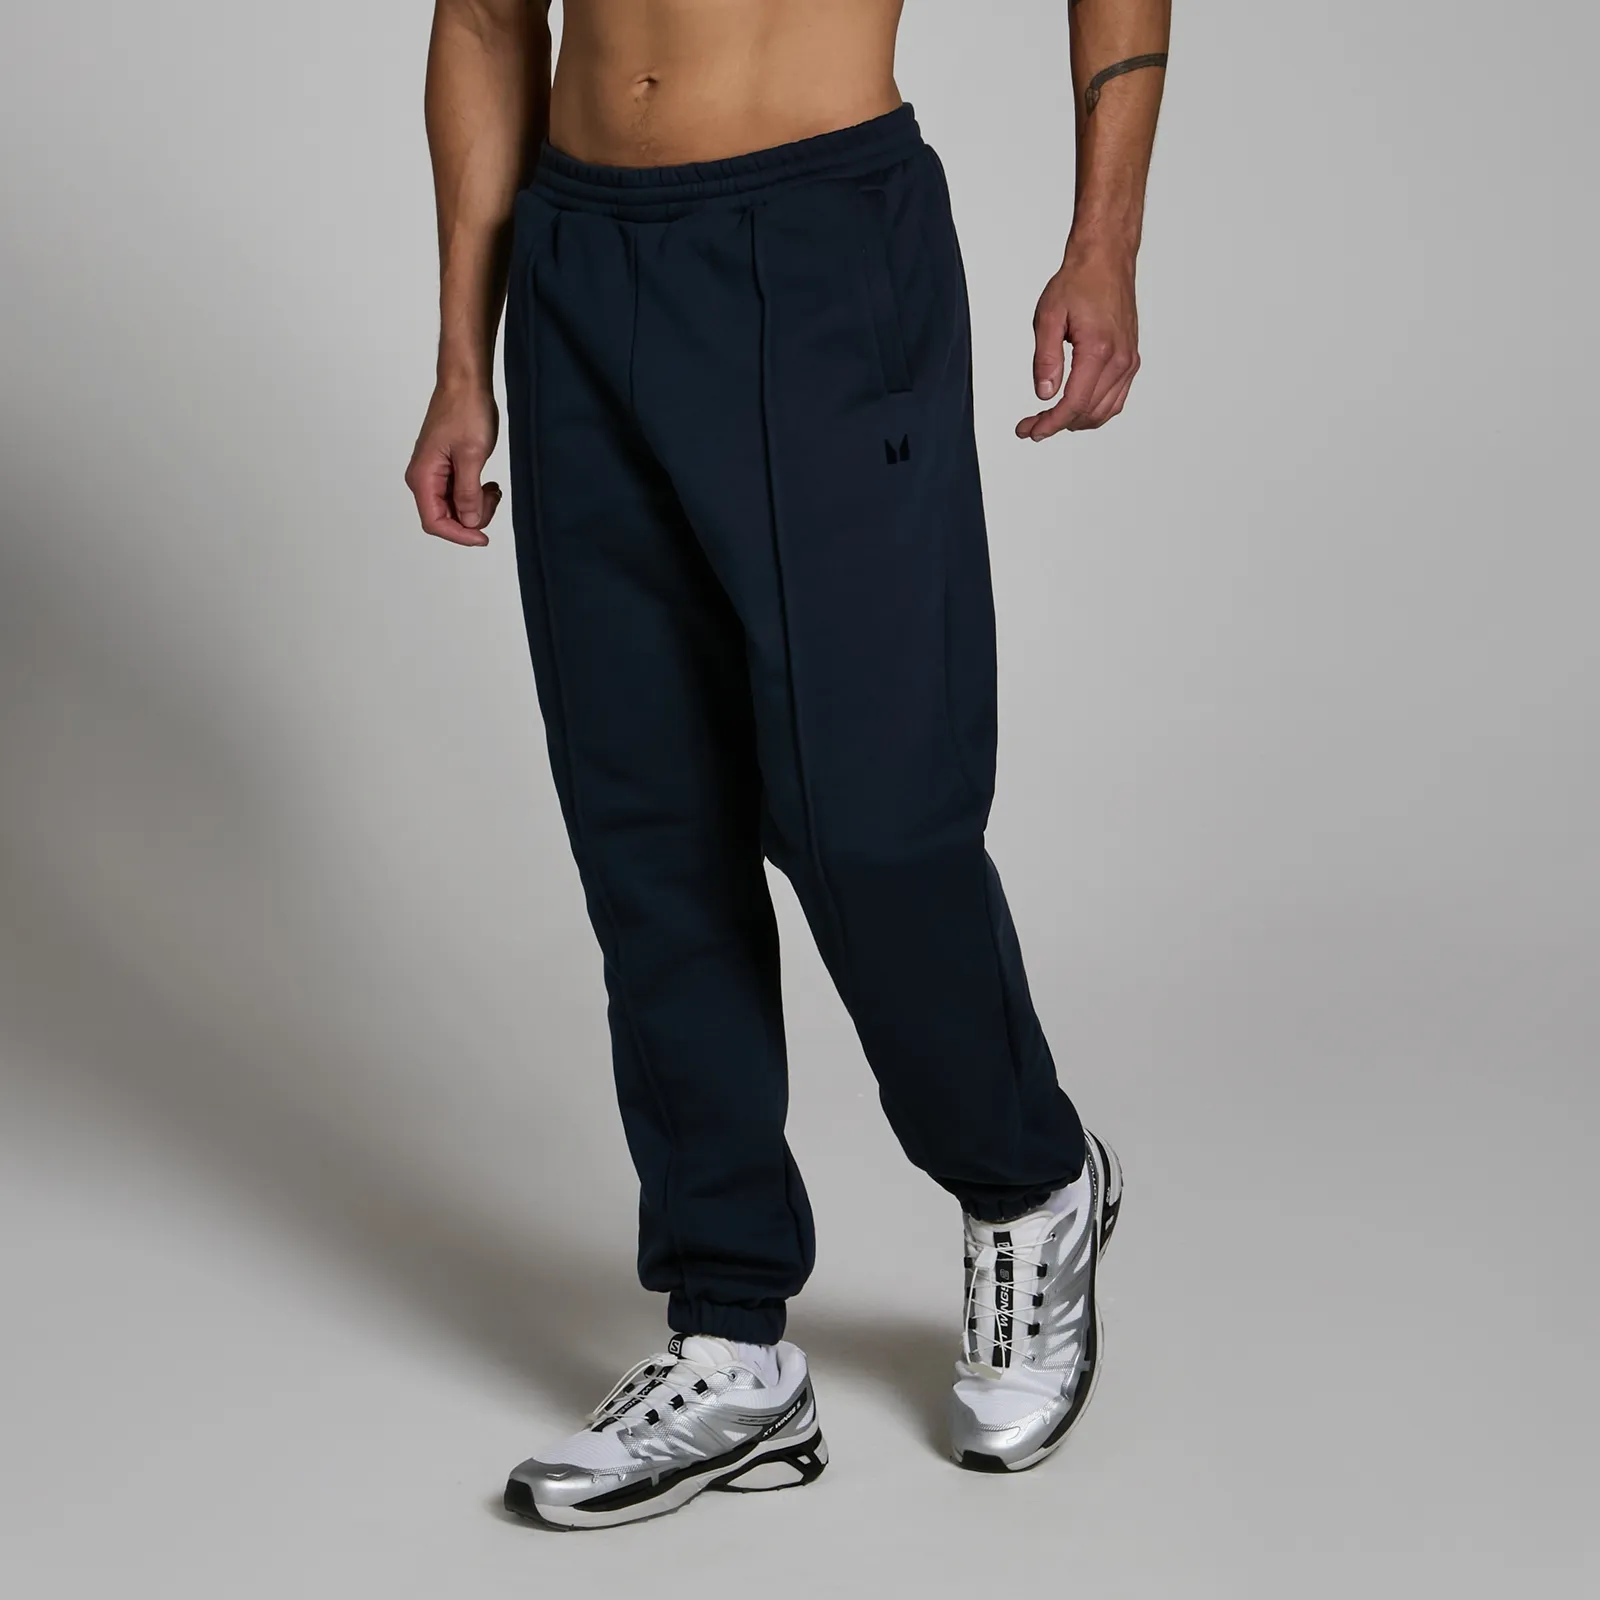 Pantaloni da jogging pesanti oversize  Lifestyle da uomo - Blu navy scuro - XS